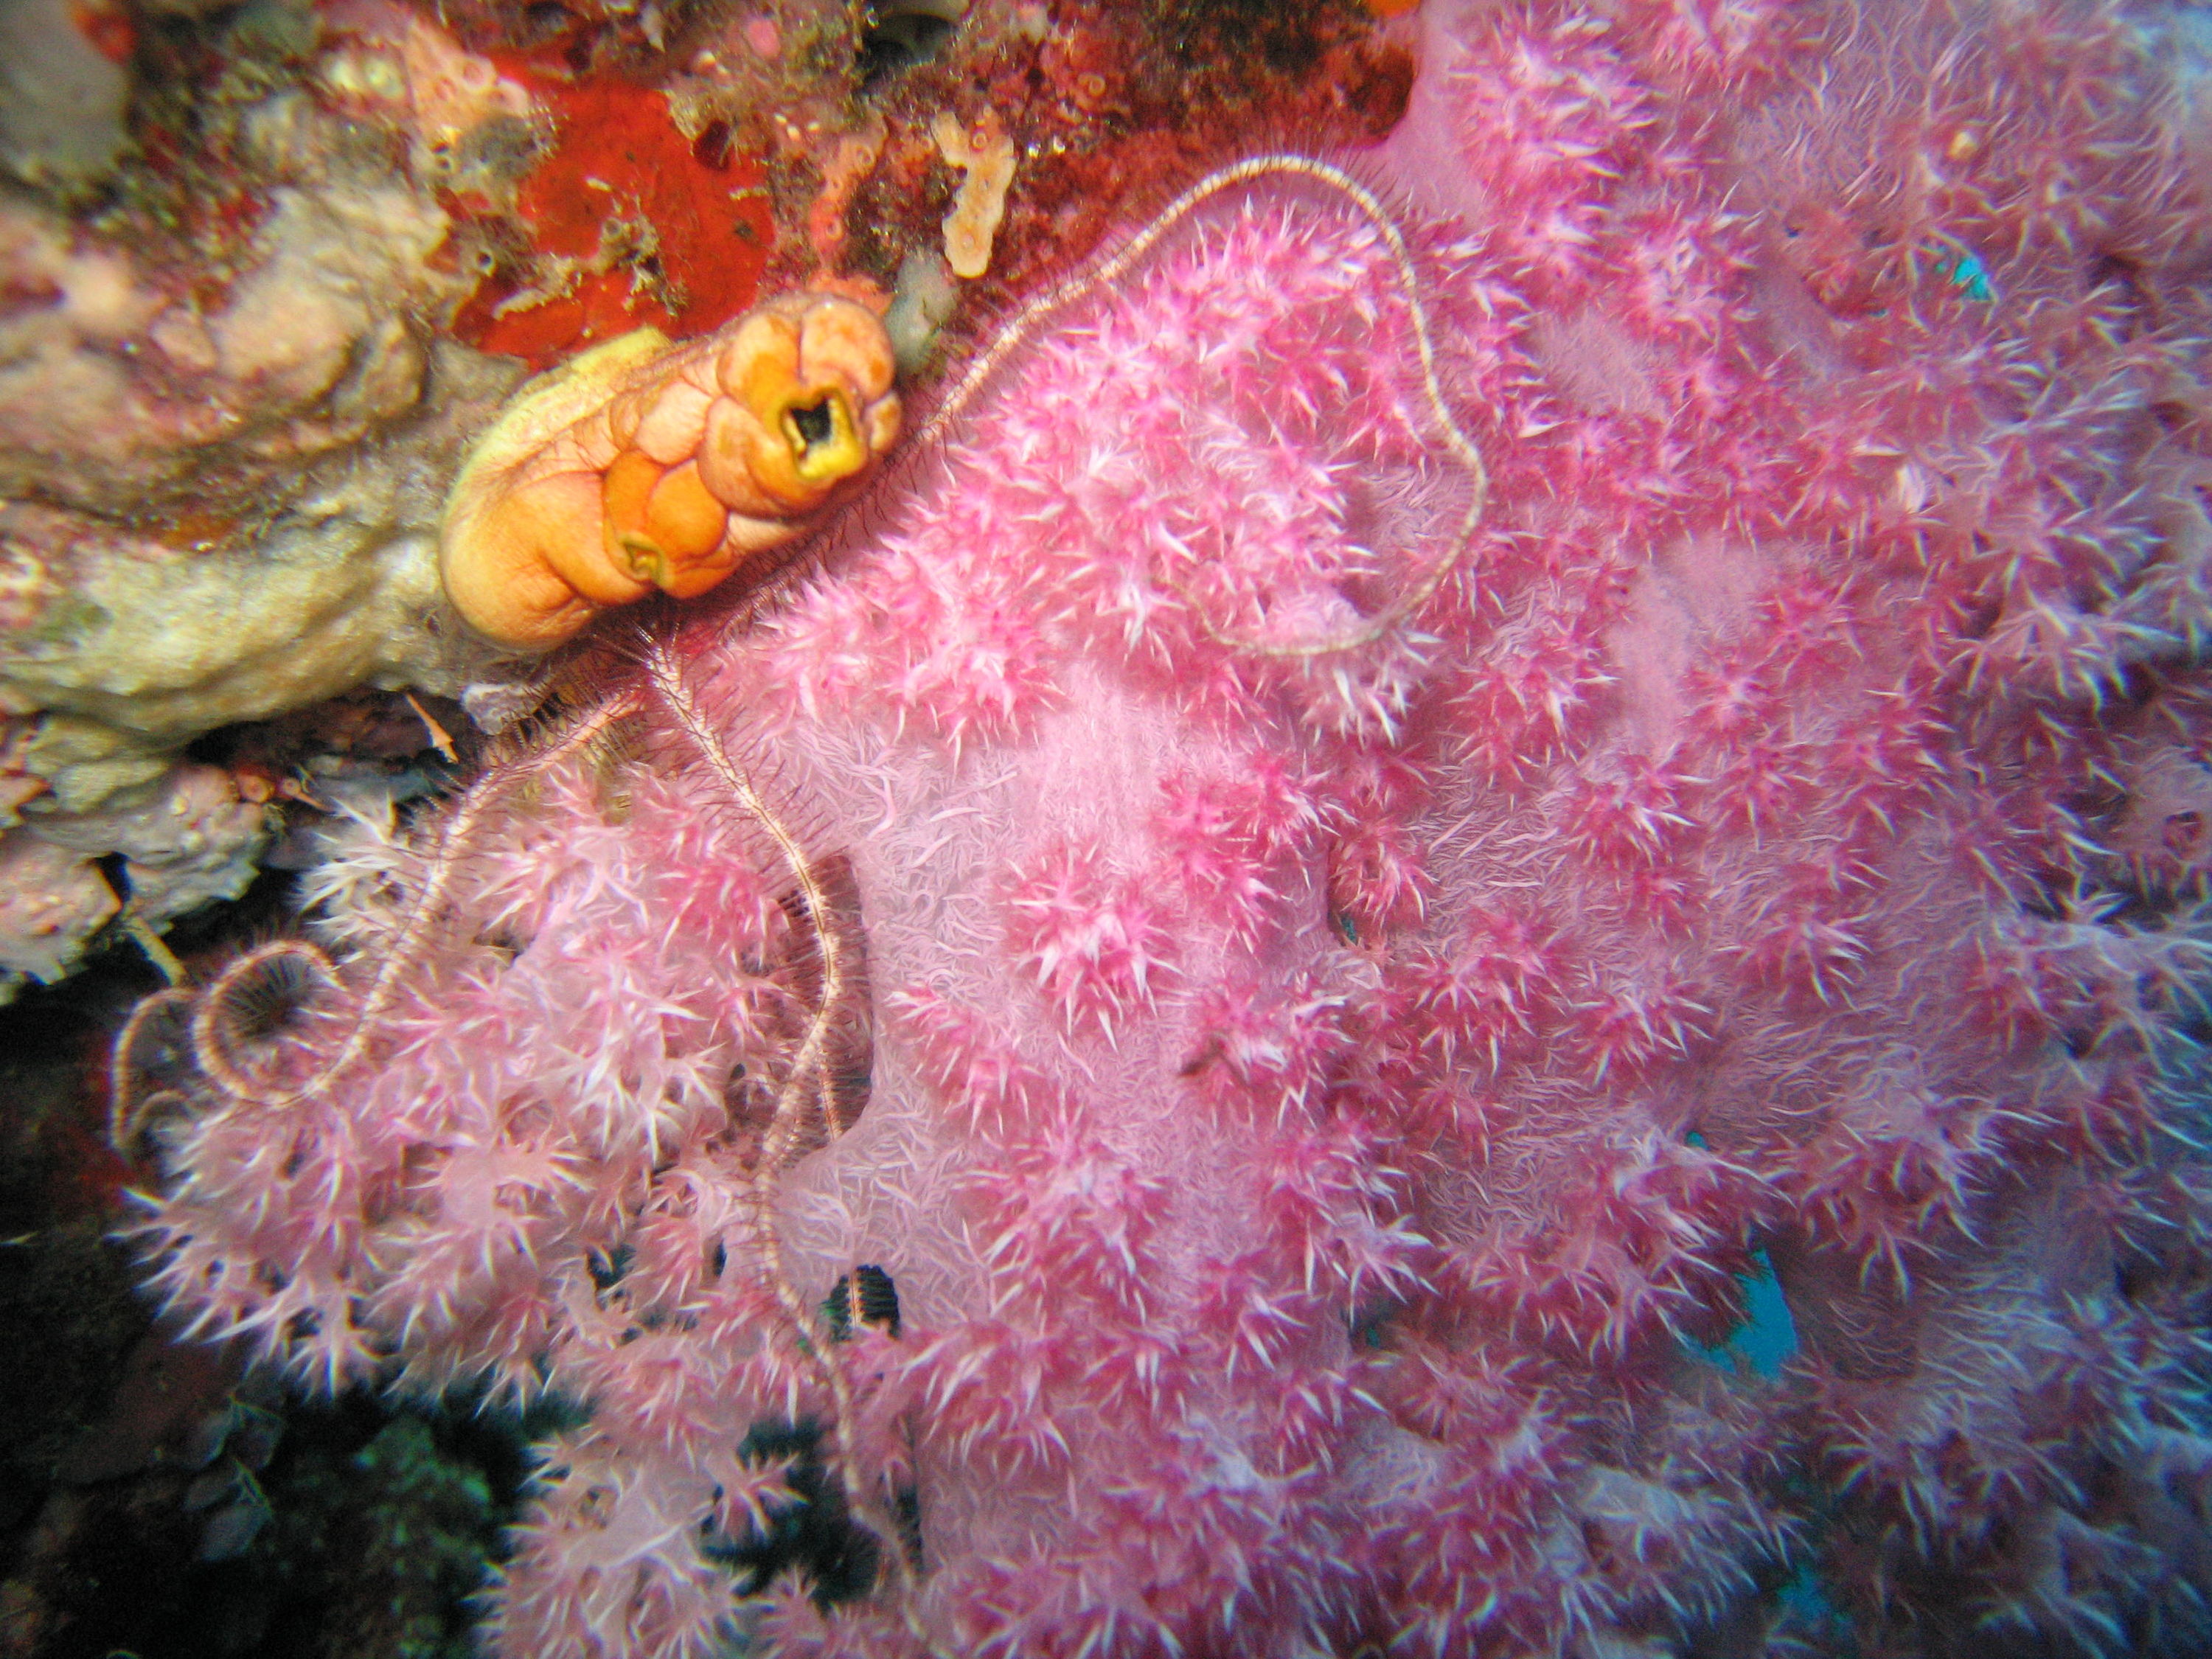 Bright Pink Corals